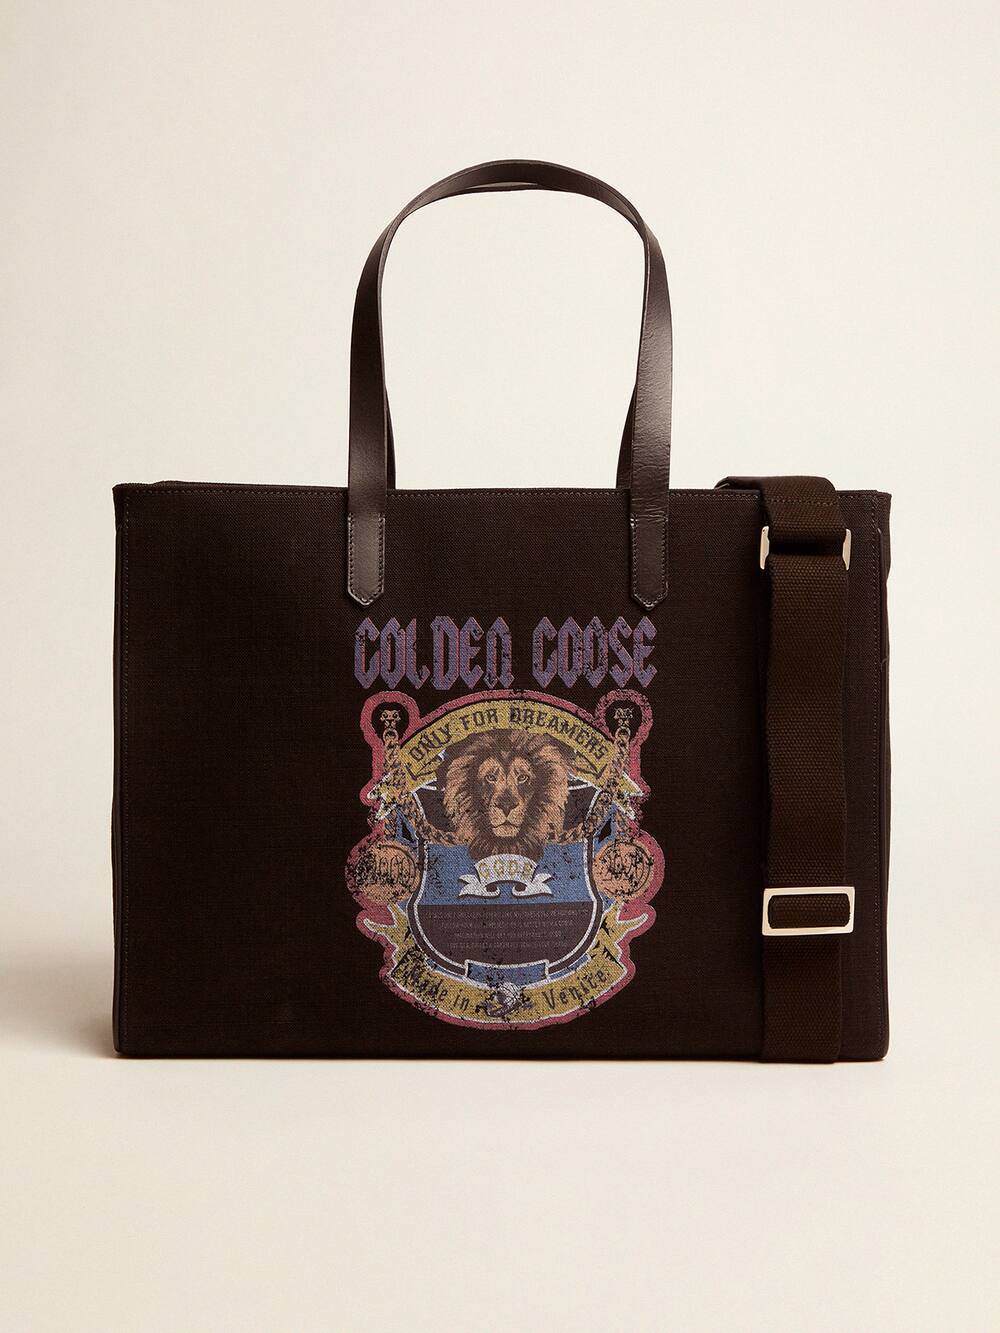 Golden Goose - Black California East-West bag with vintage print in 